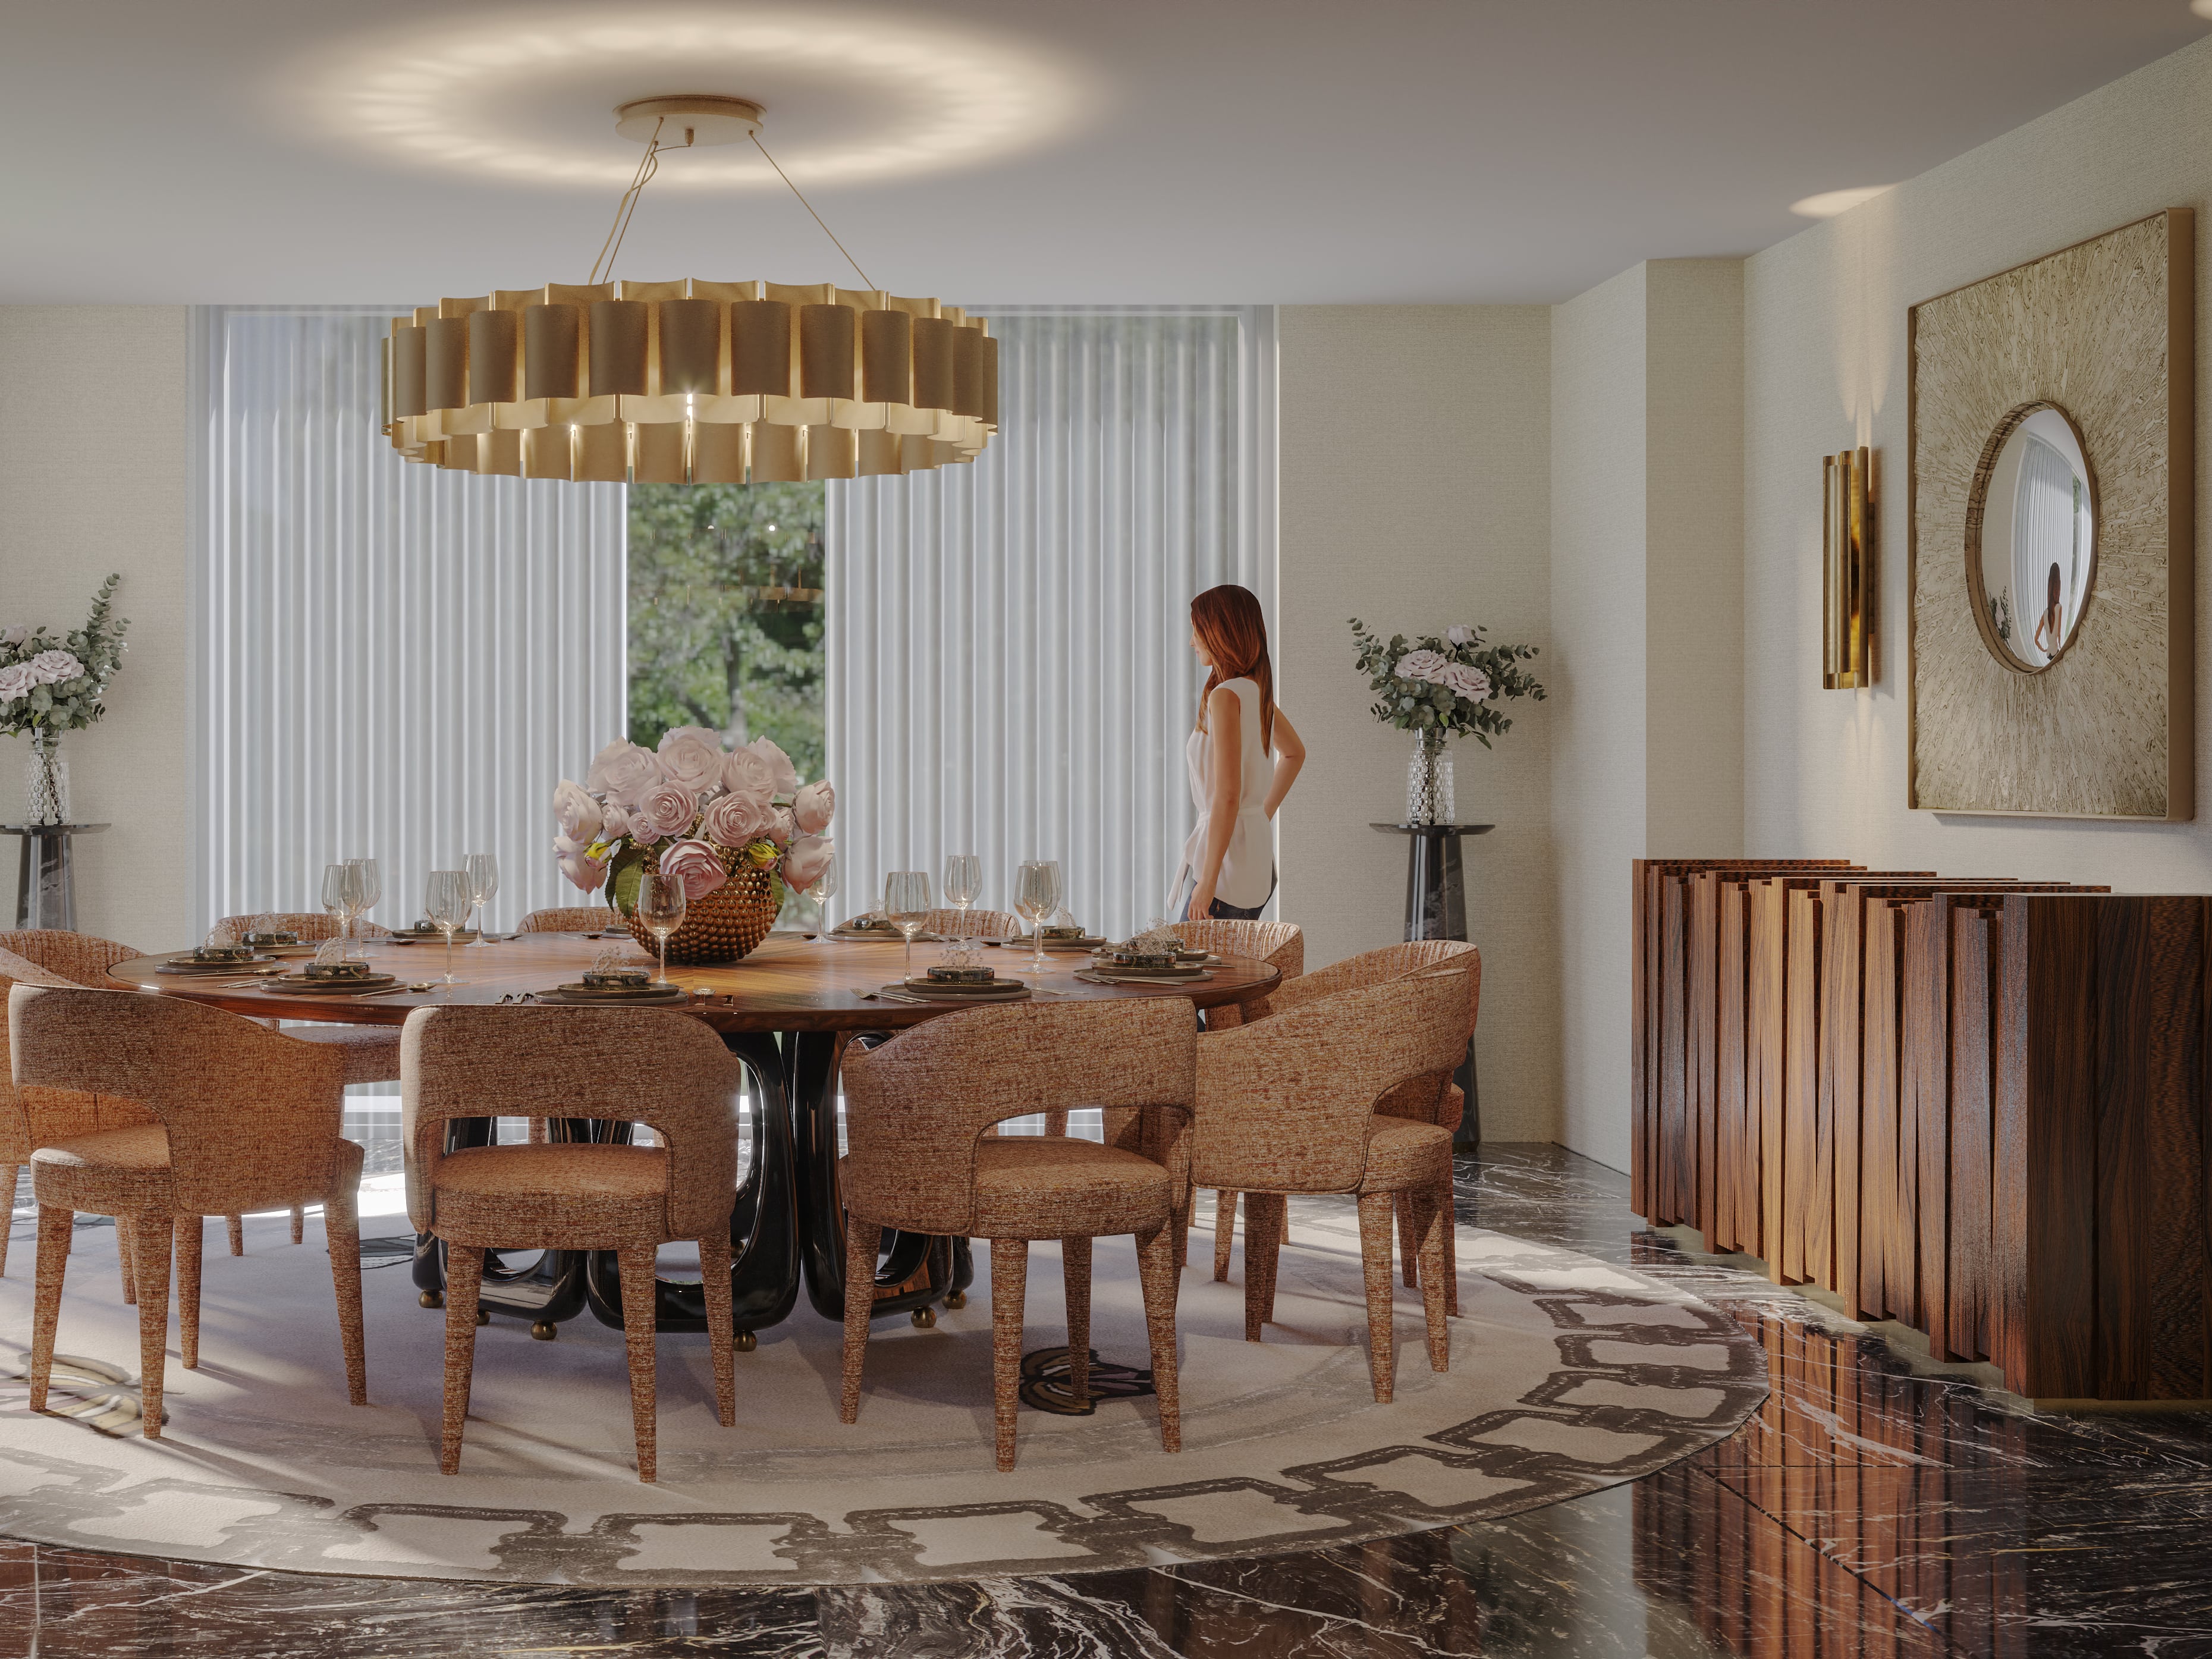 Modern Dining Room Design In Light Tones - Home'Society